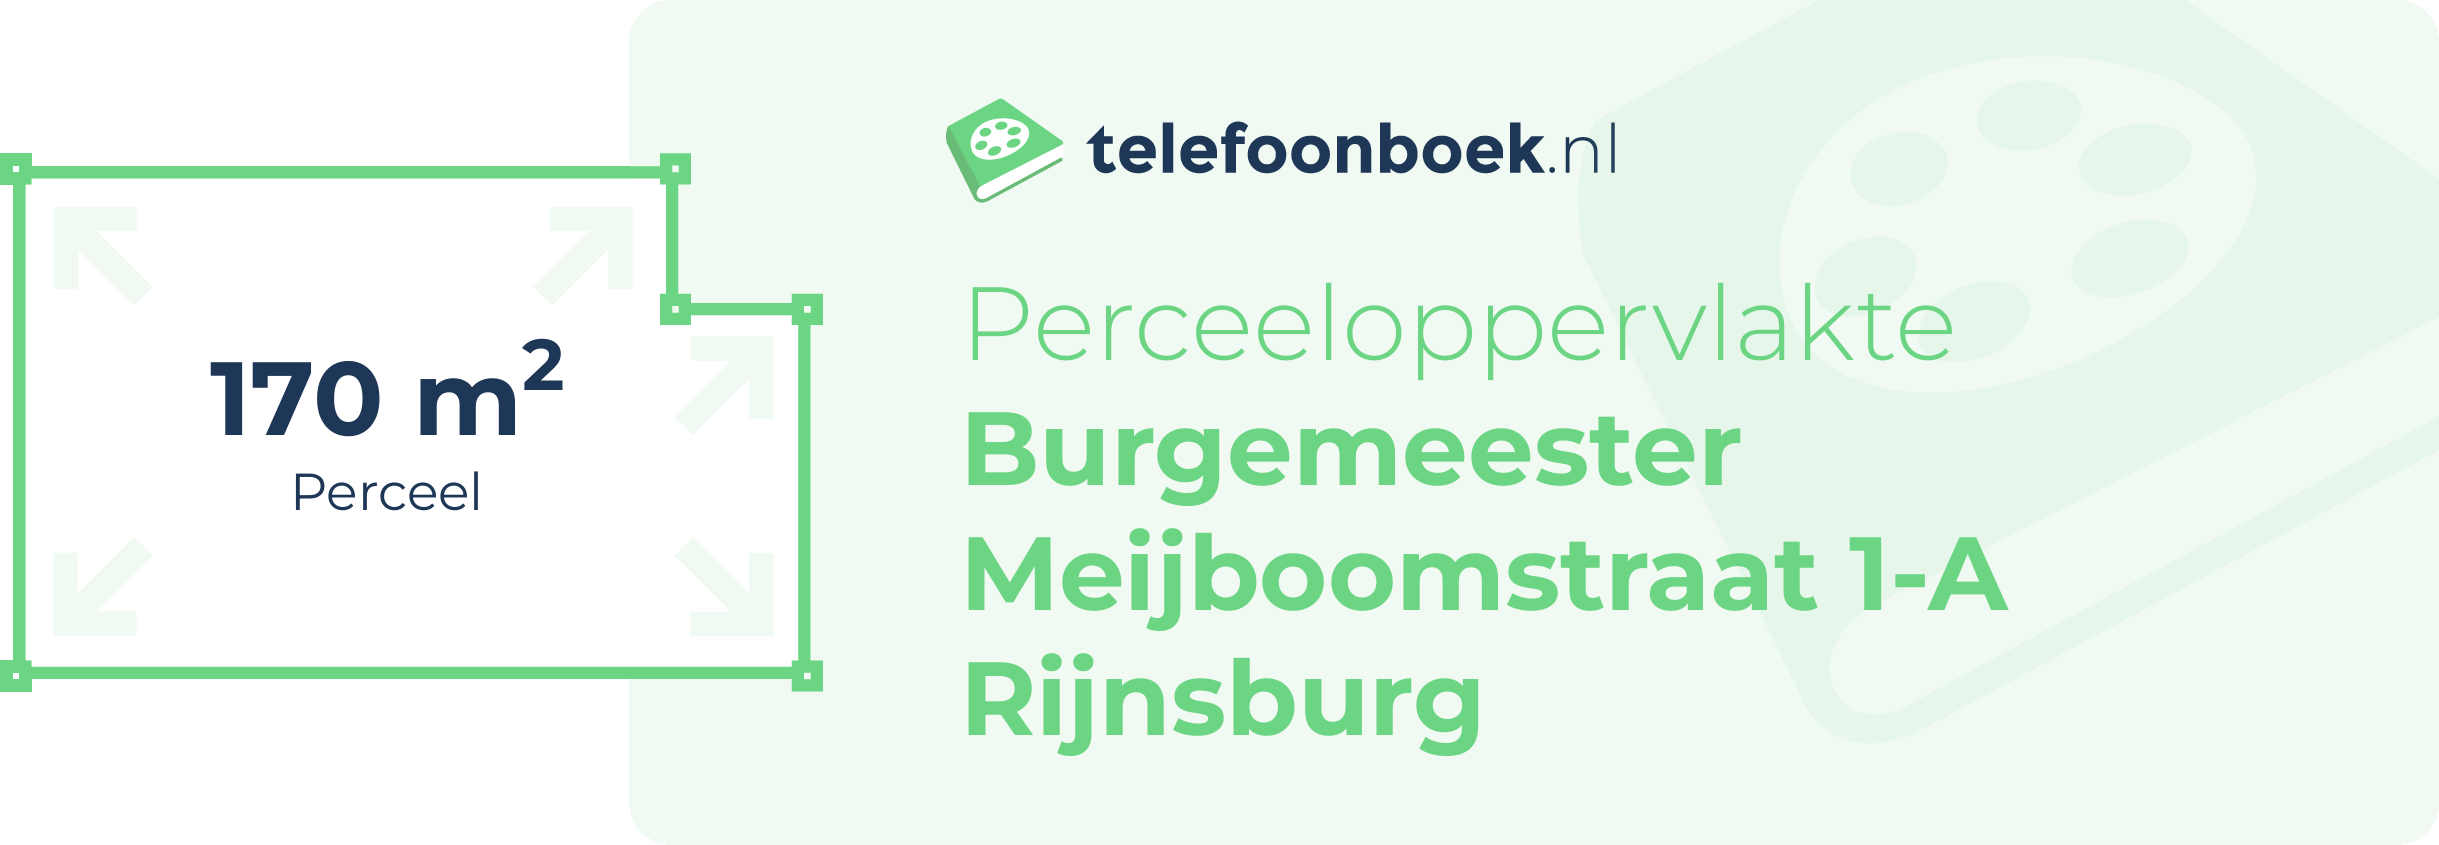 Perceeloppervlakte Burgemeester Meijboomstraat 1-A Rijnsburg